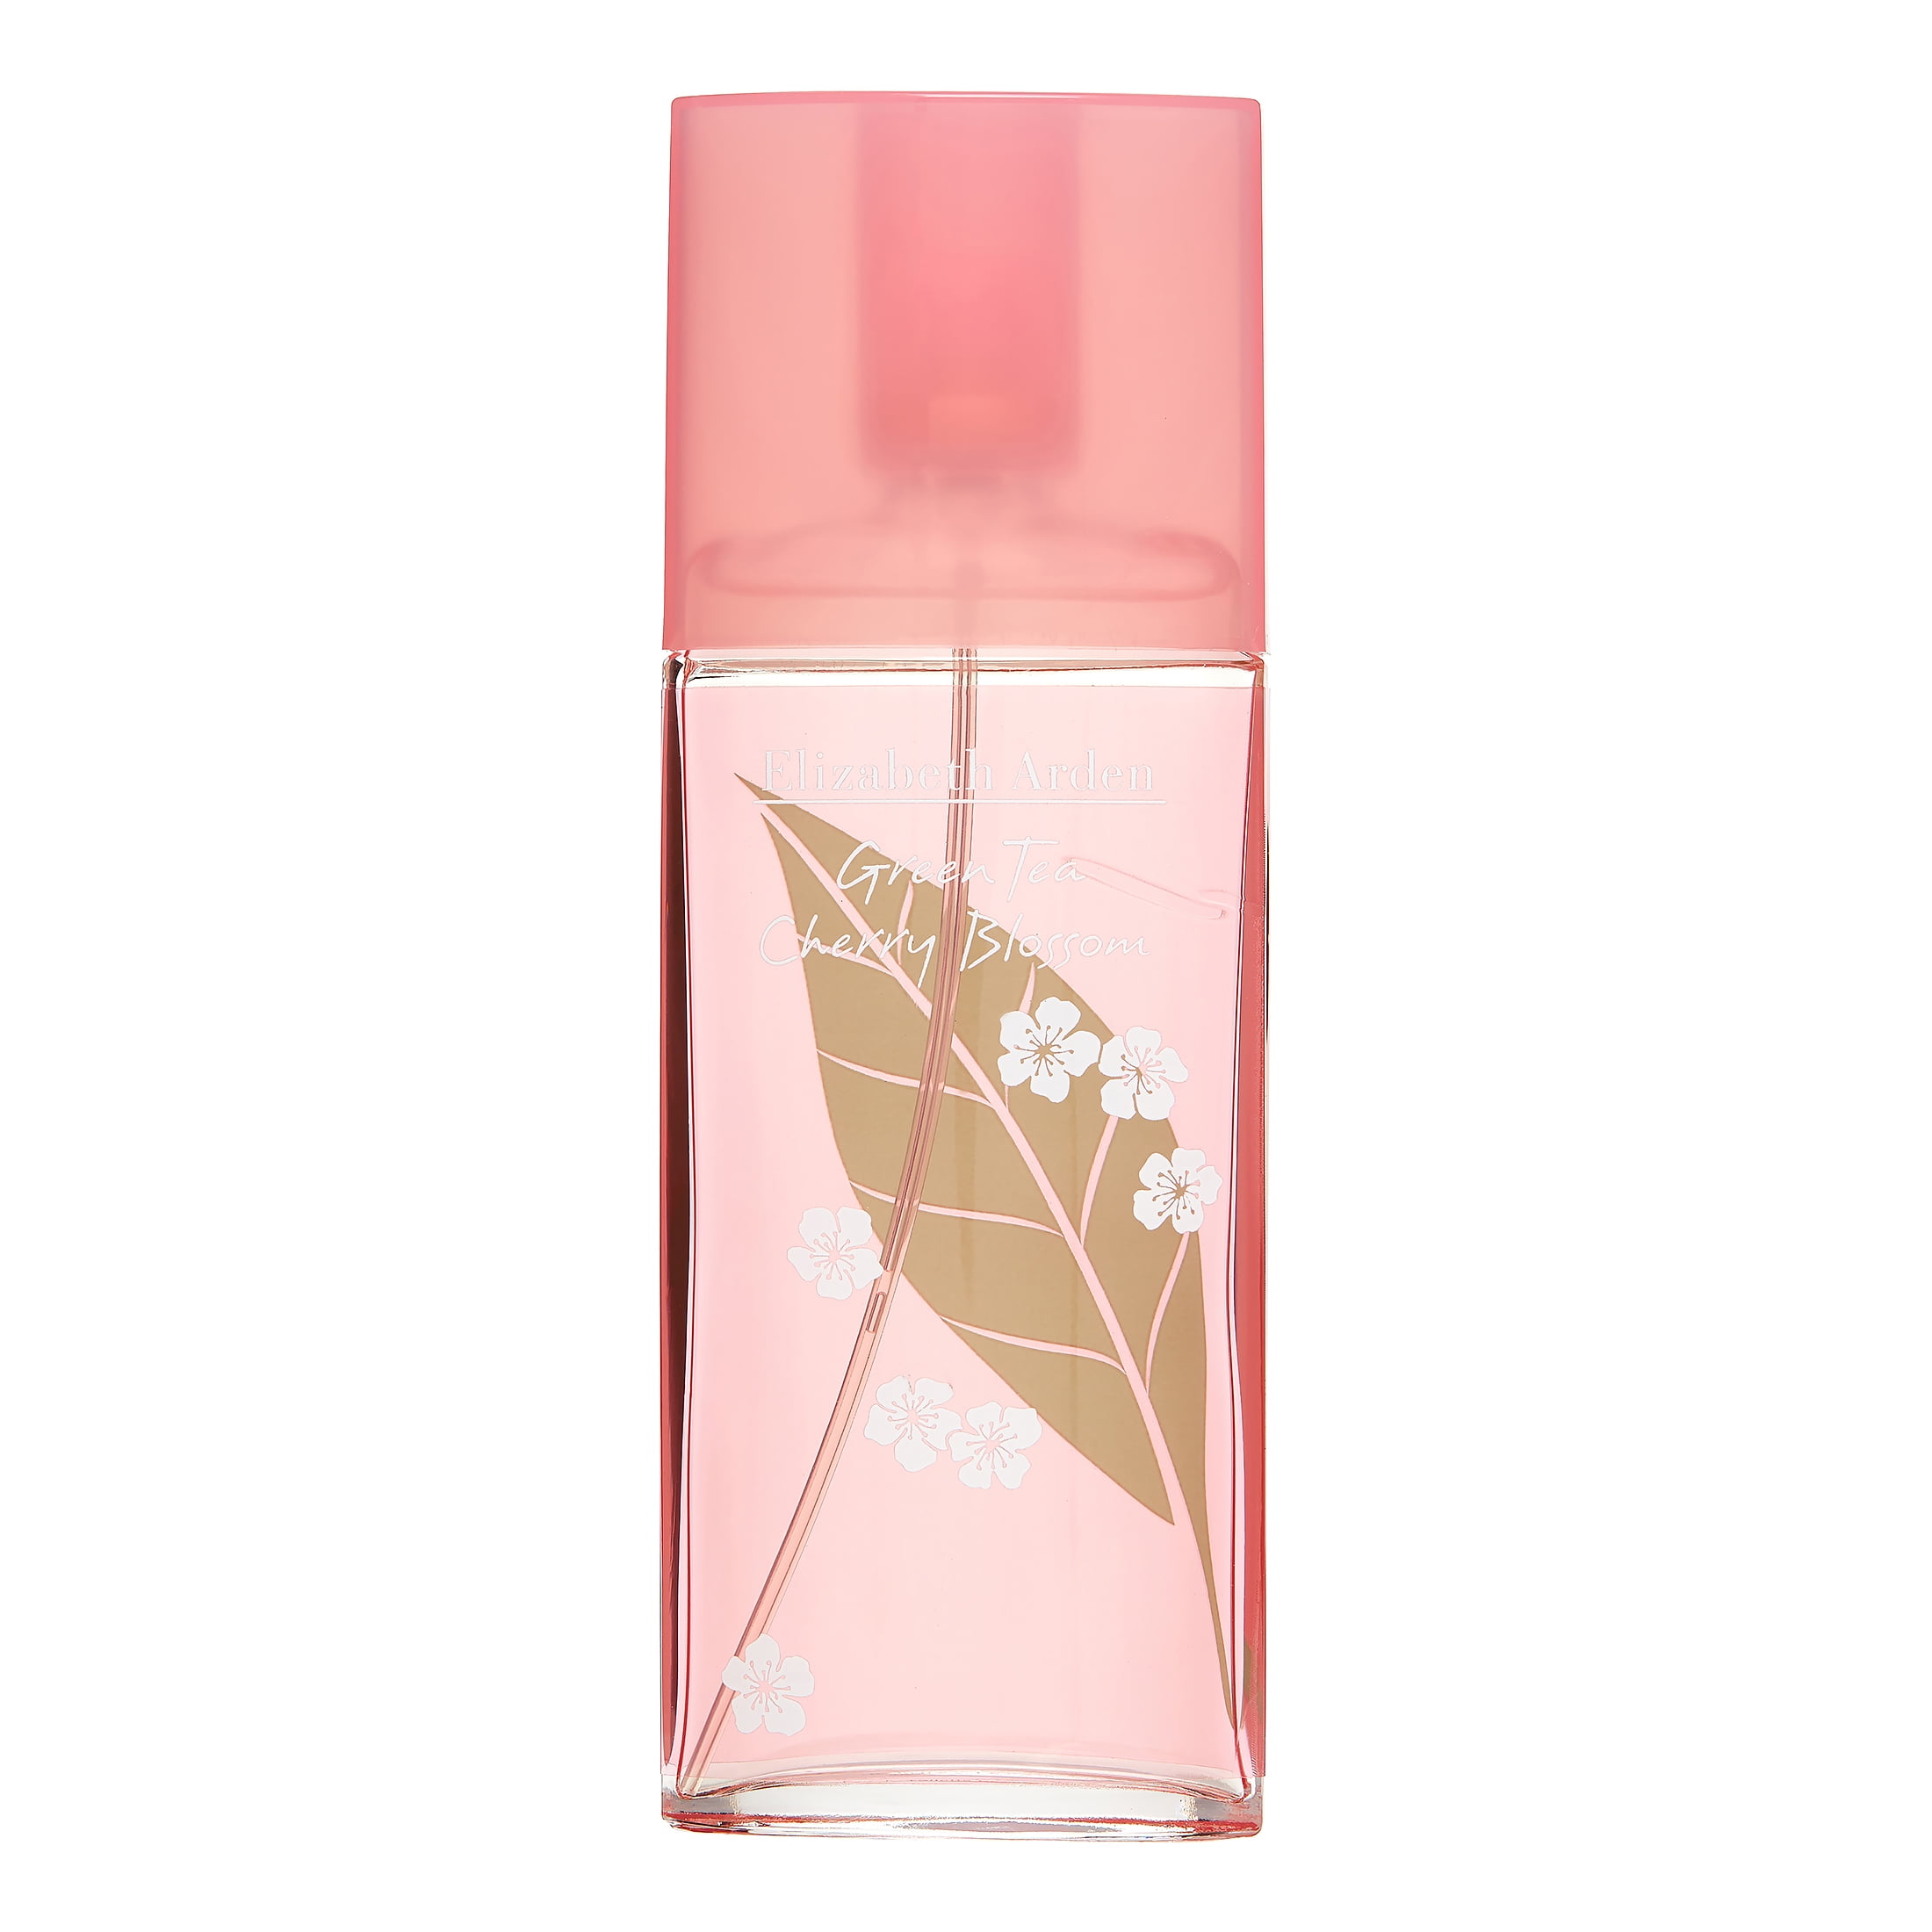 elizabeth arden perfume pink bottle